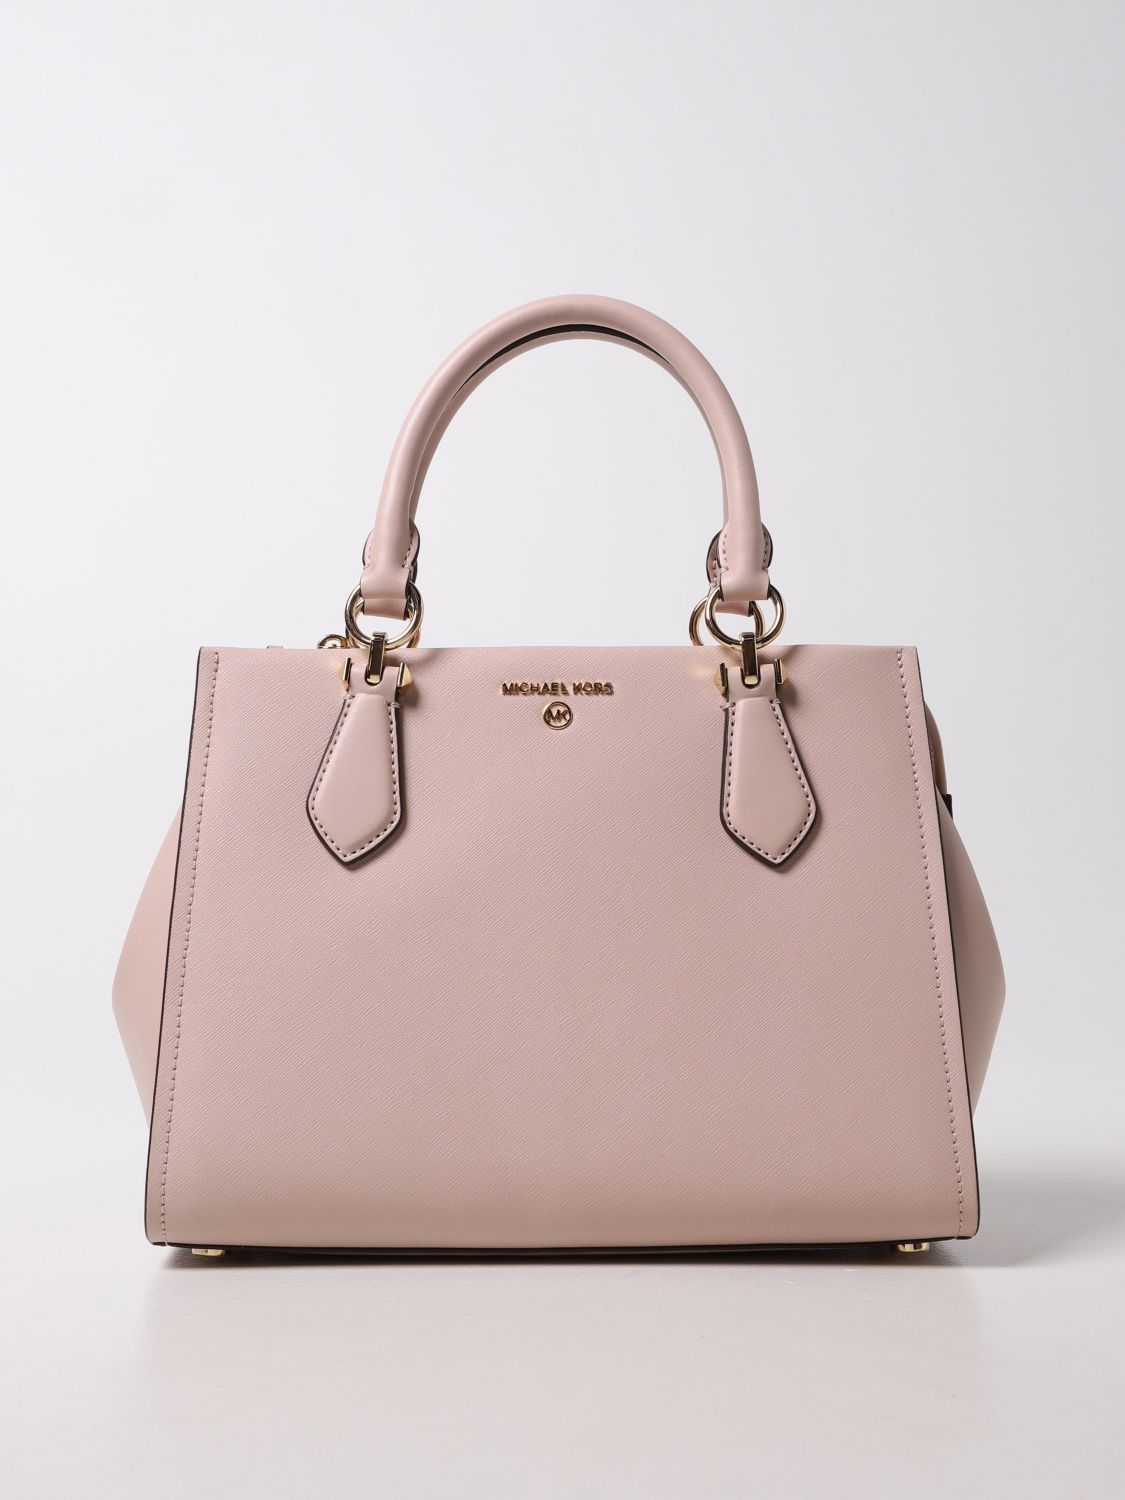 MICHAEL KORS: Marilyn Michael bag in blown leather - Pink